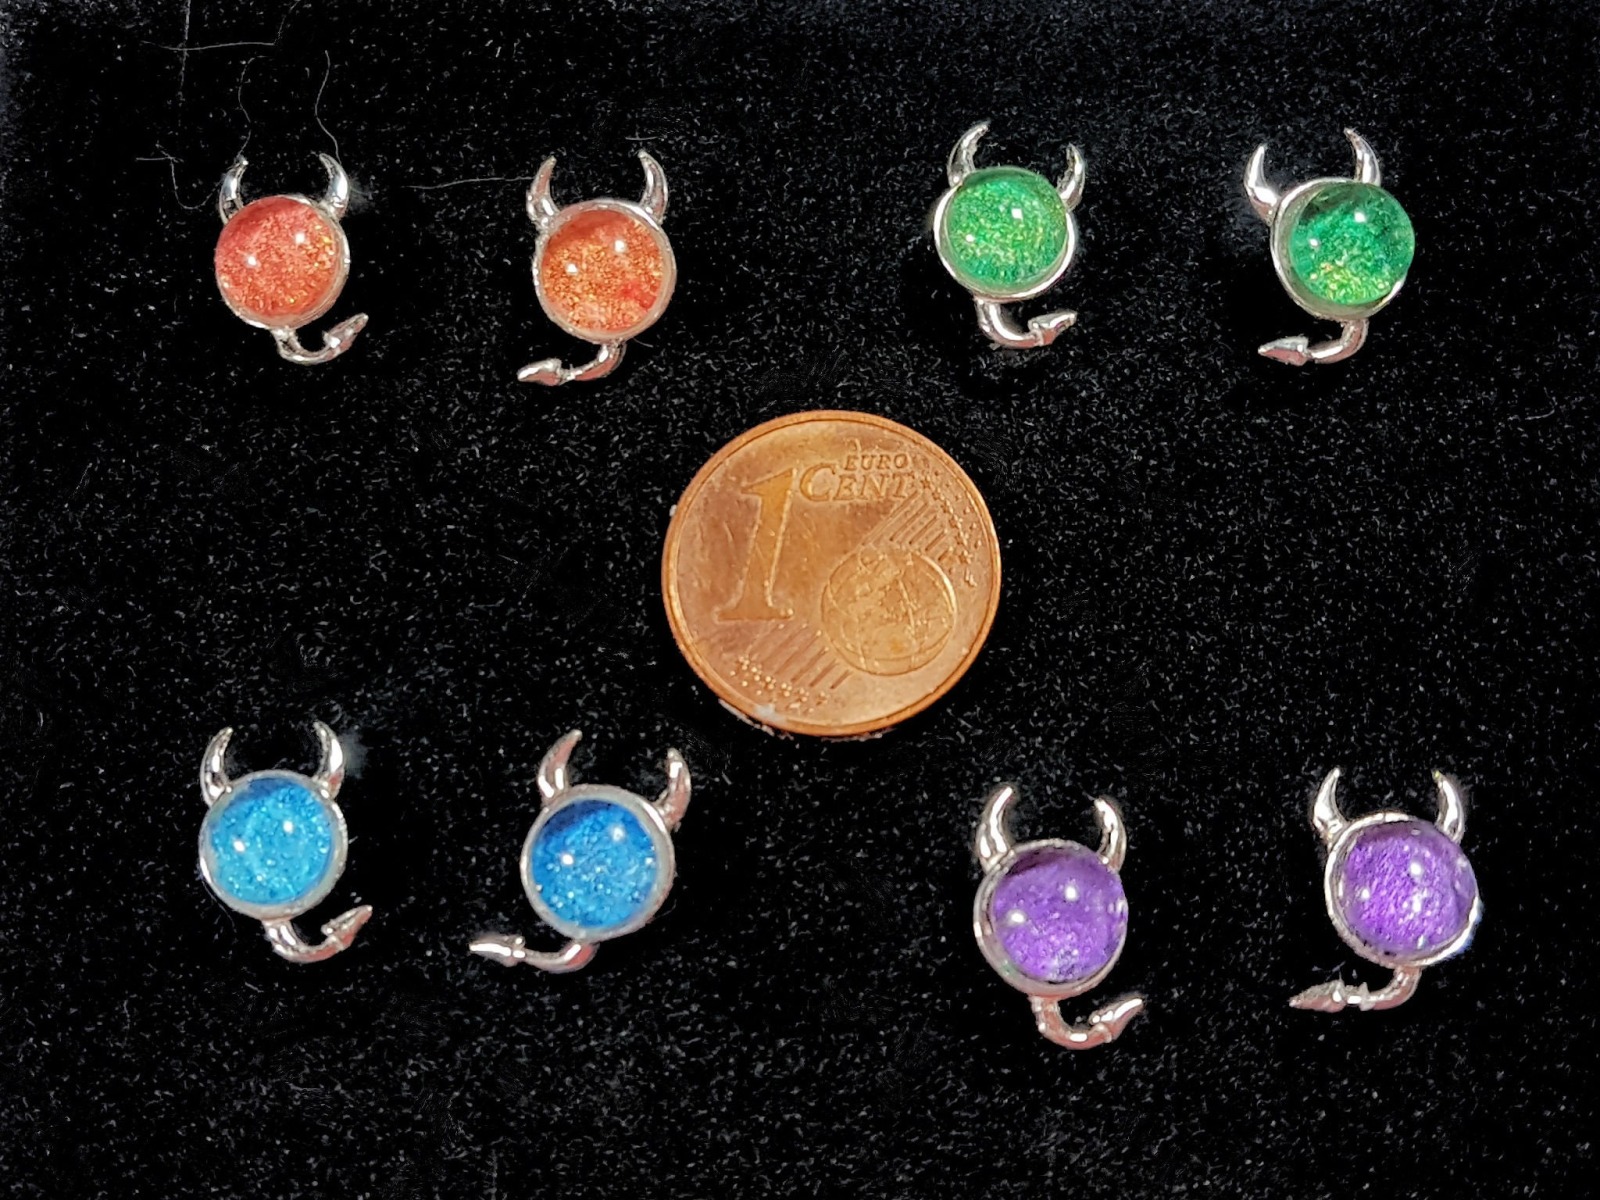 Teufels Galaxien handgemalt mehrere Farben Echtsilber-Ohrringe Original Aquarell in Sterling Silber mit Teufelshörnern Ohrstecker 6